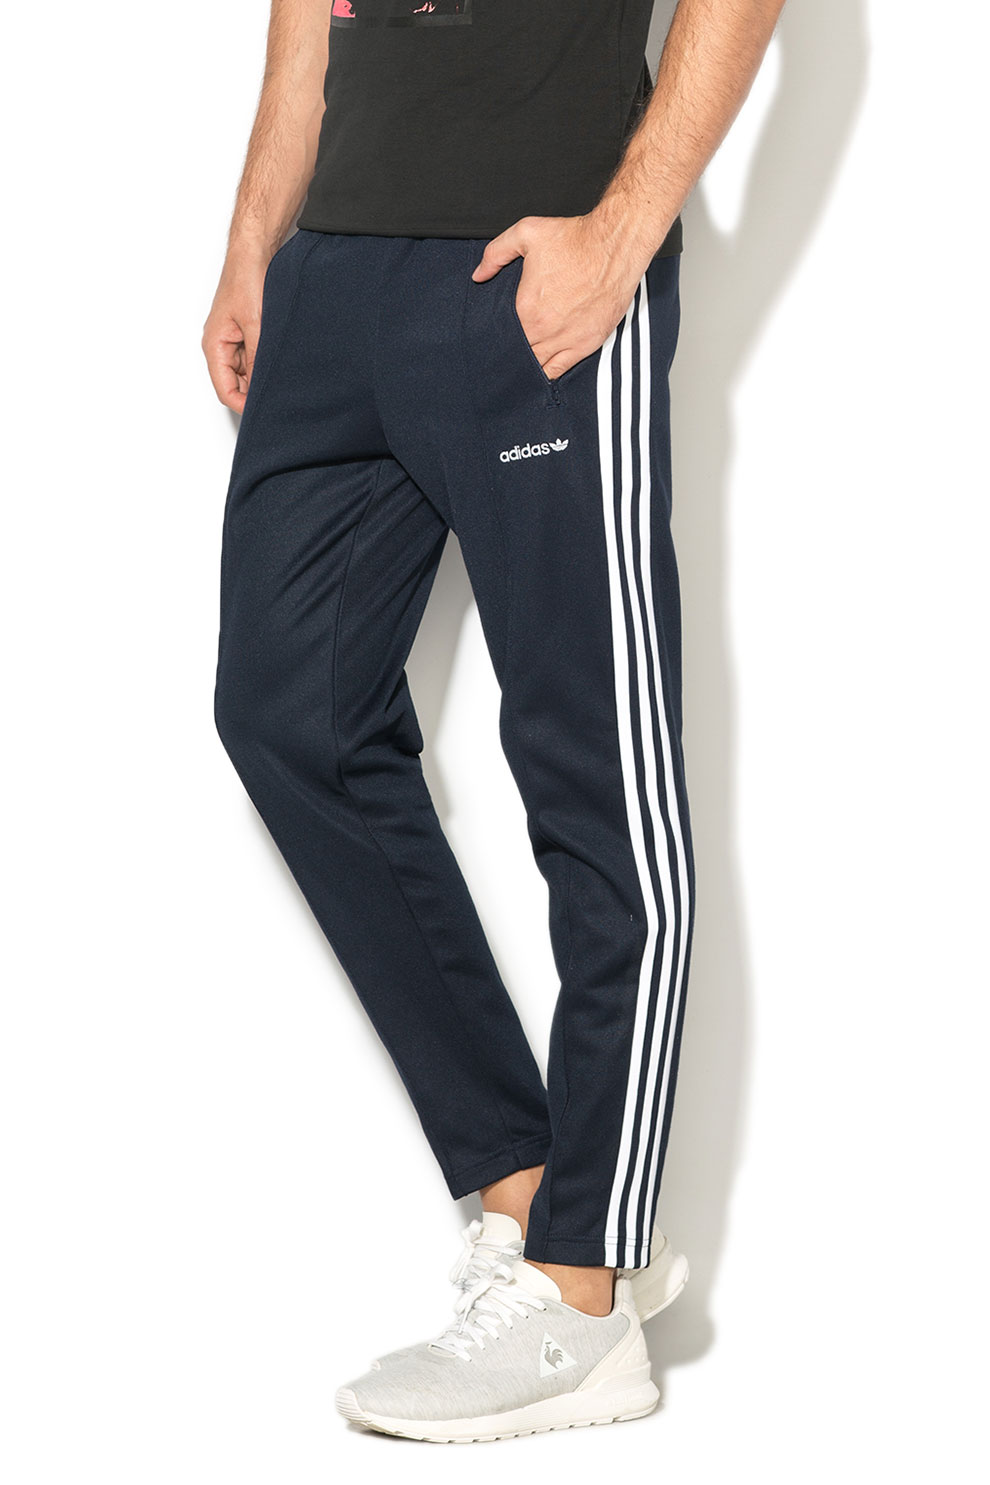 Adidas Pantaloni sport cu snur si buzunare cu Bleumarin - eMAG.ro